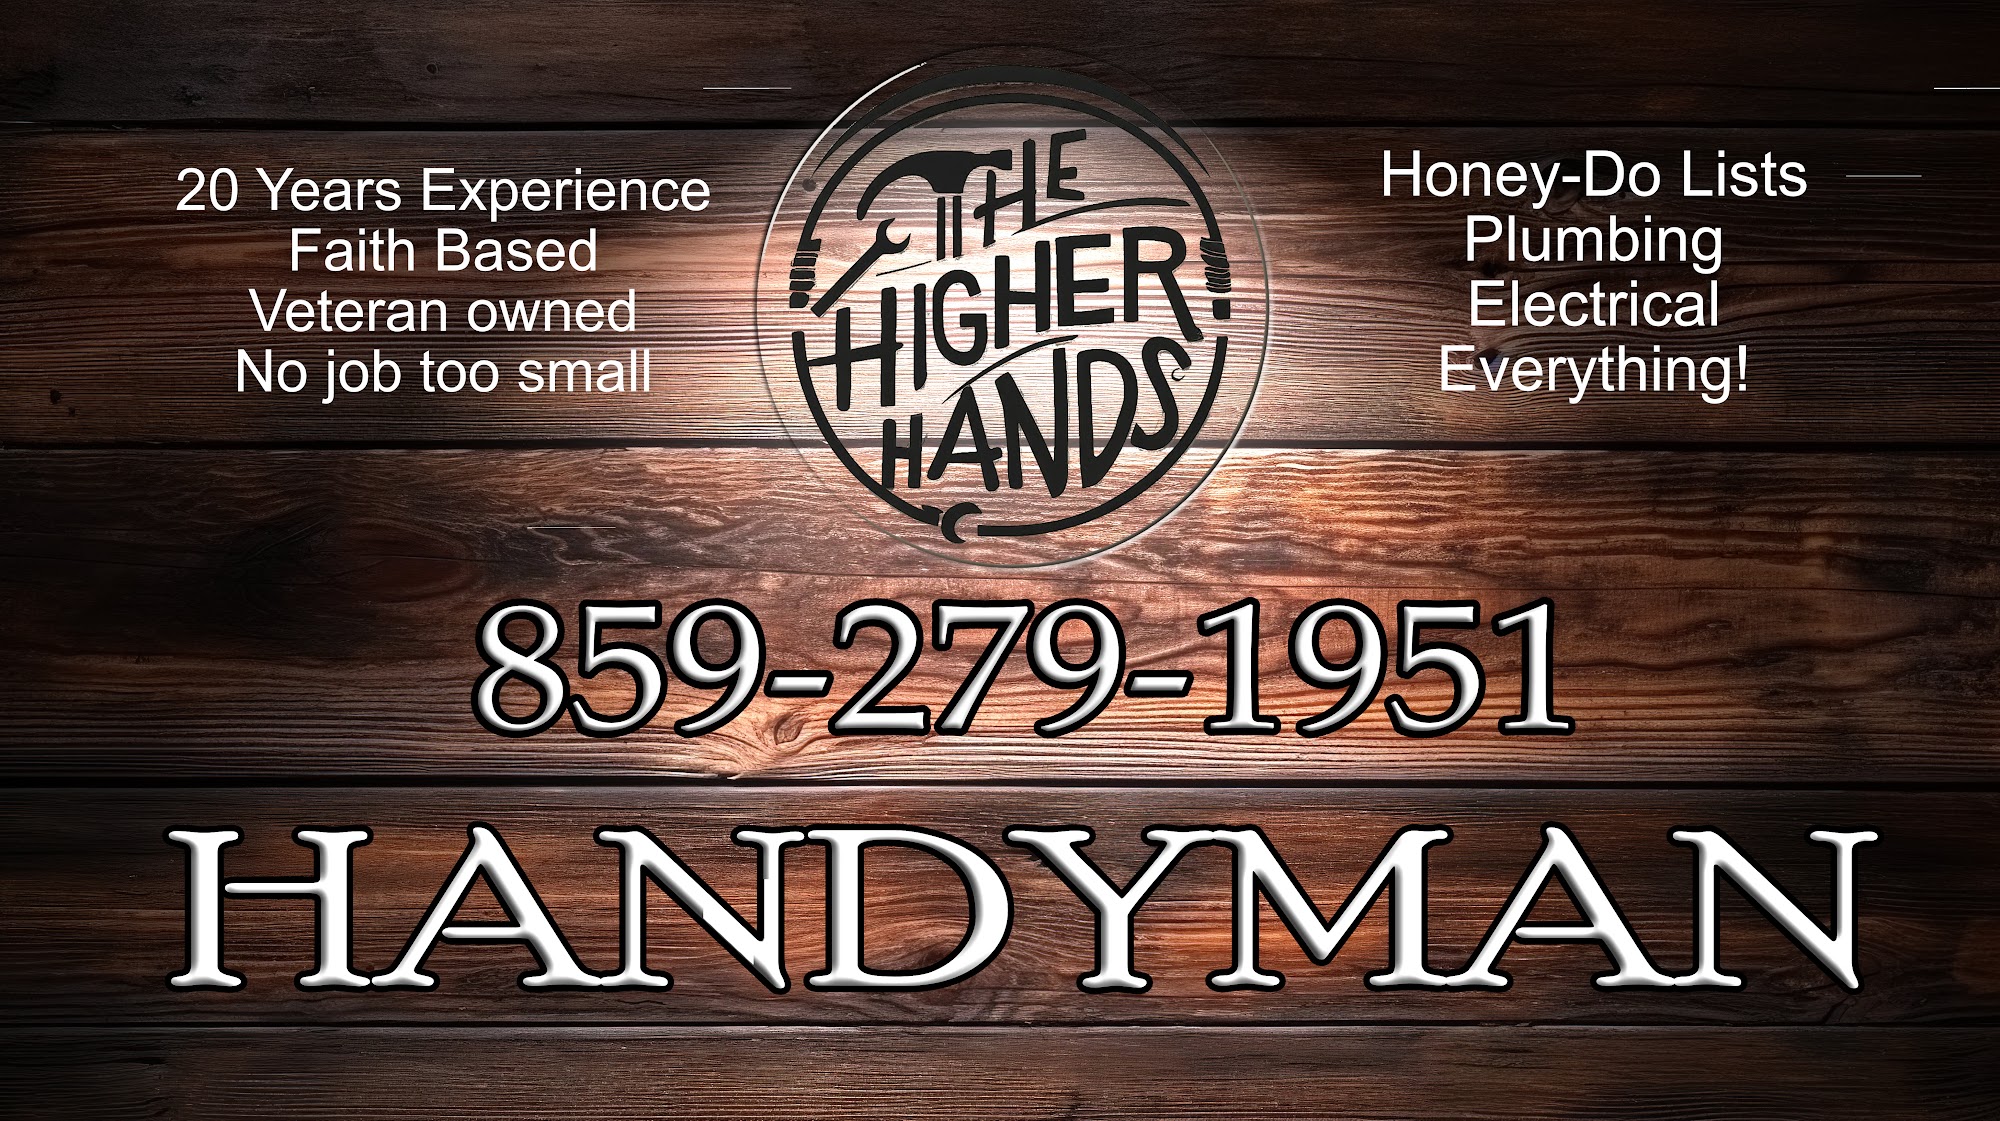 The Higher Hands - Handyman